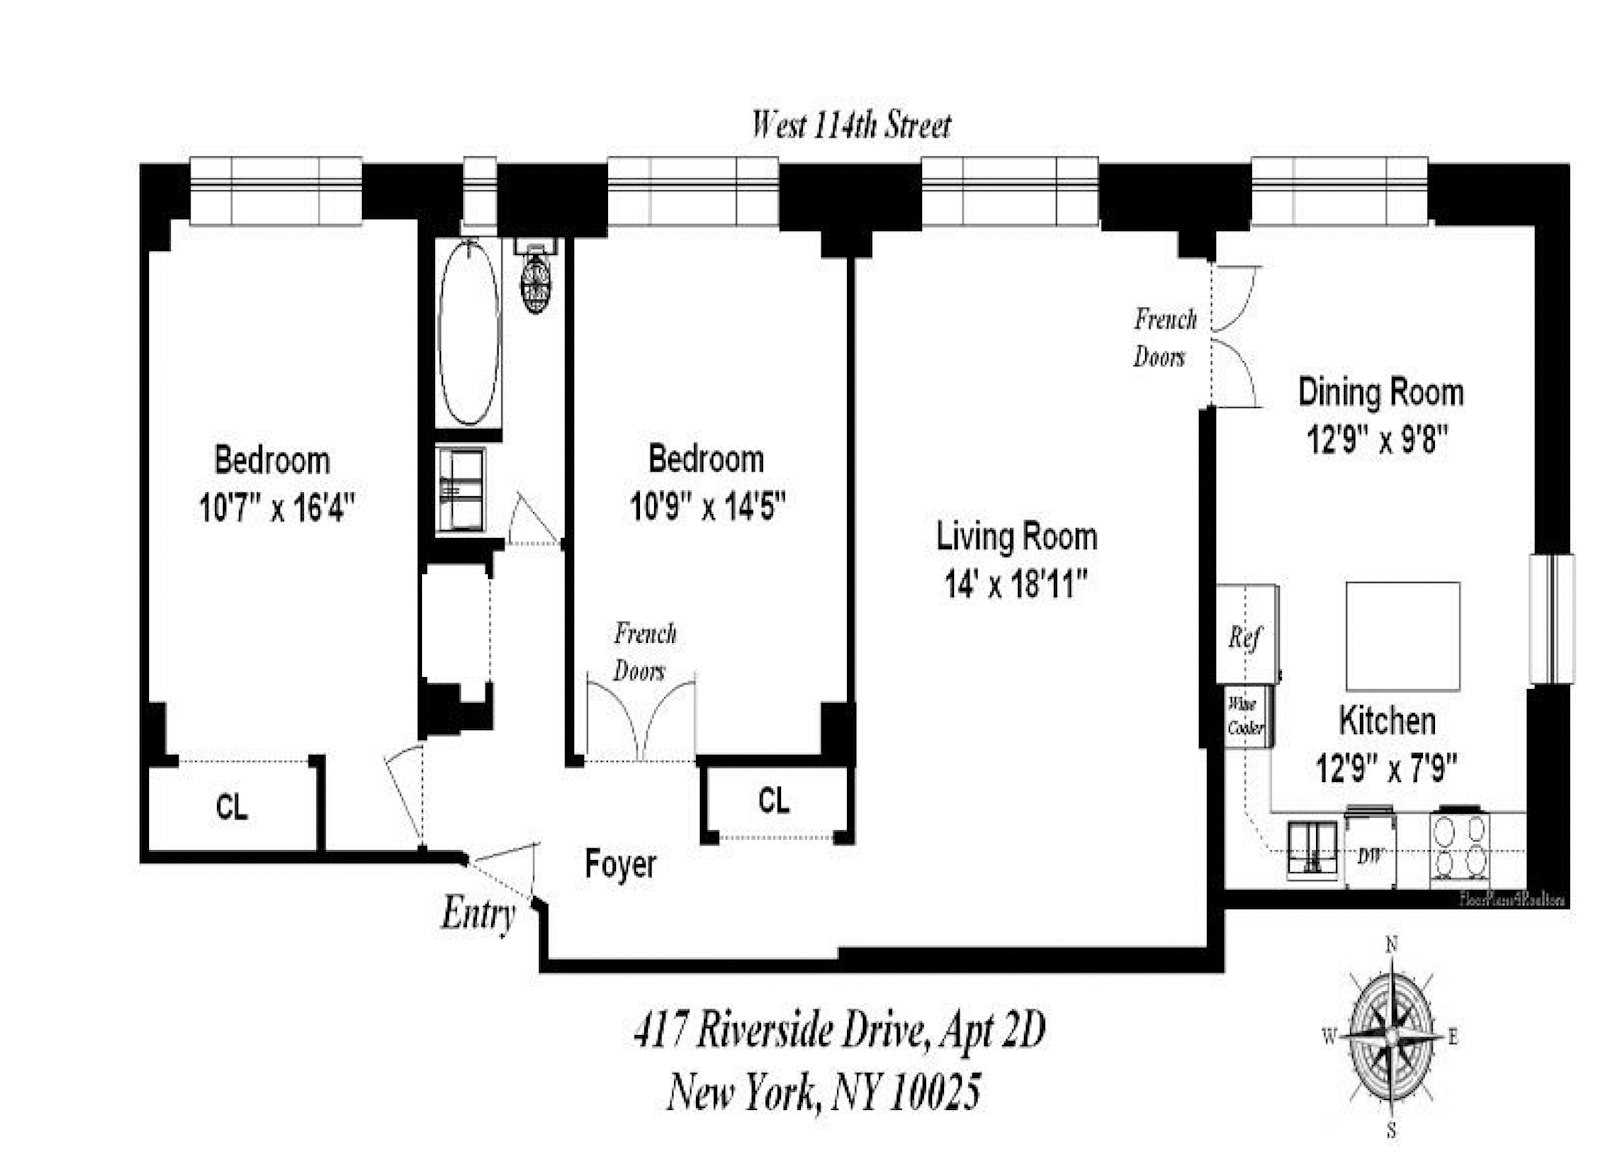 Floorplan for 417 Riverside Drive, 2D